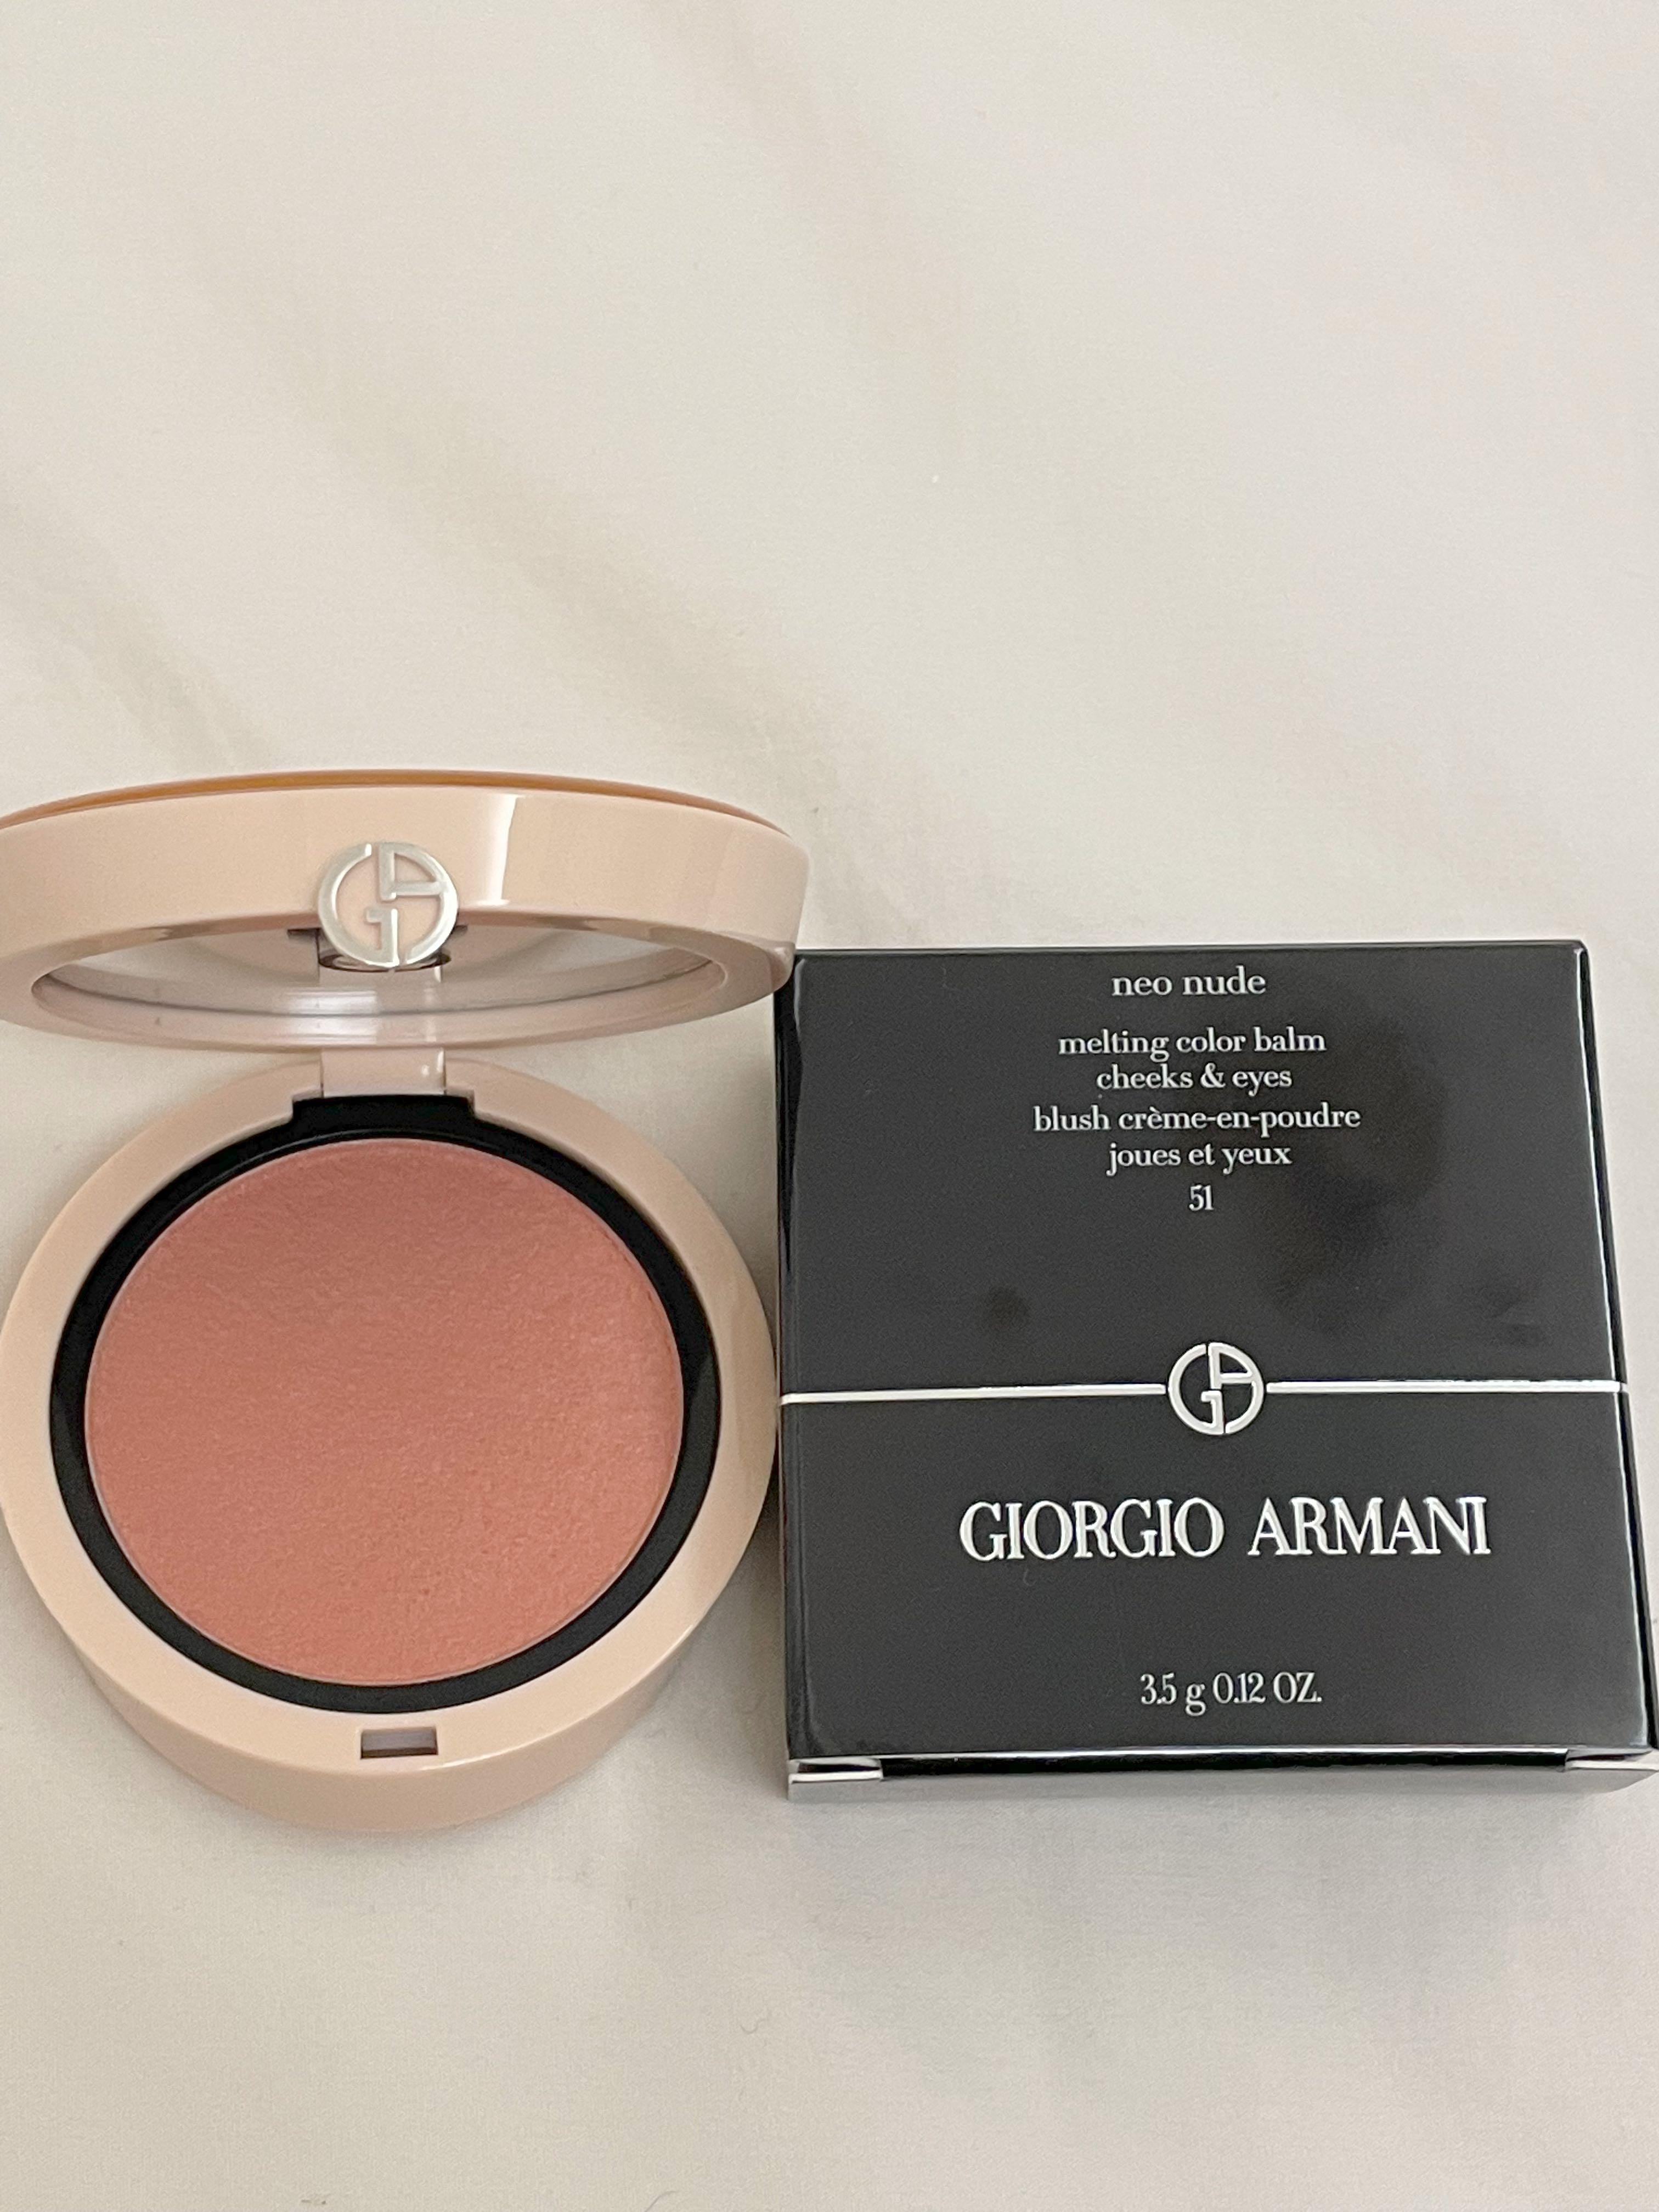 全新Giorgio Armani neo nude melting color balm 51, 美容＆化妝品, 健康及美容- 皮膚護理, 化妝品-  Carousell